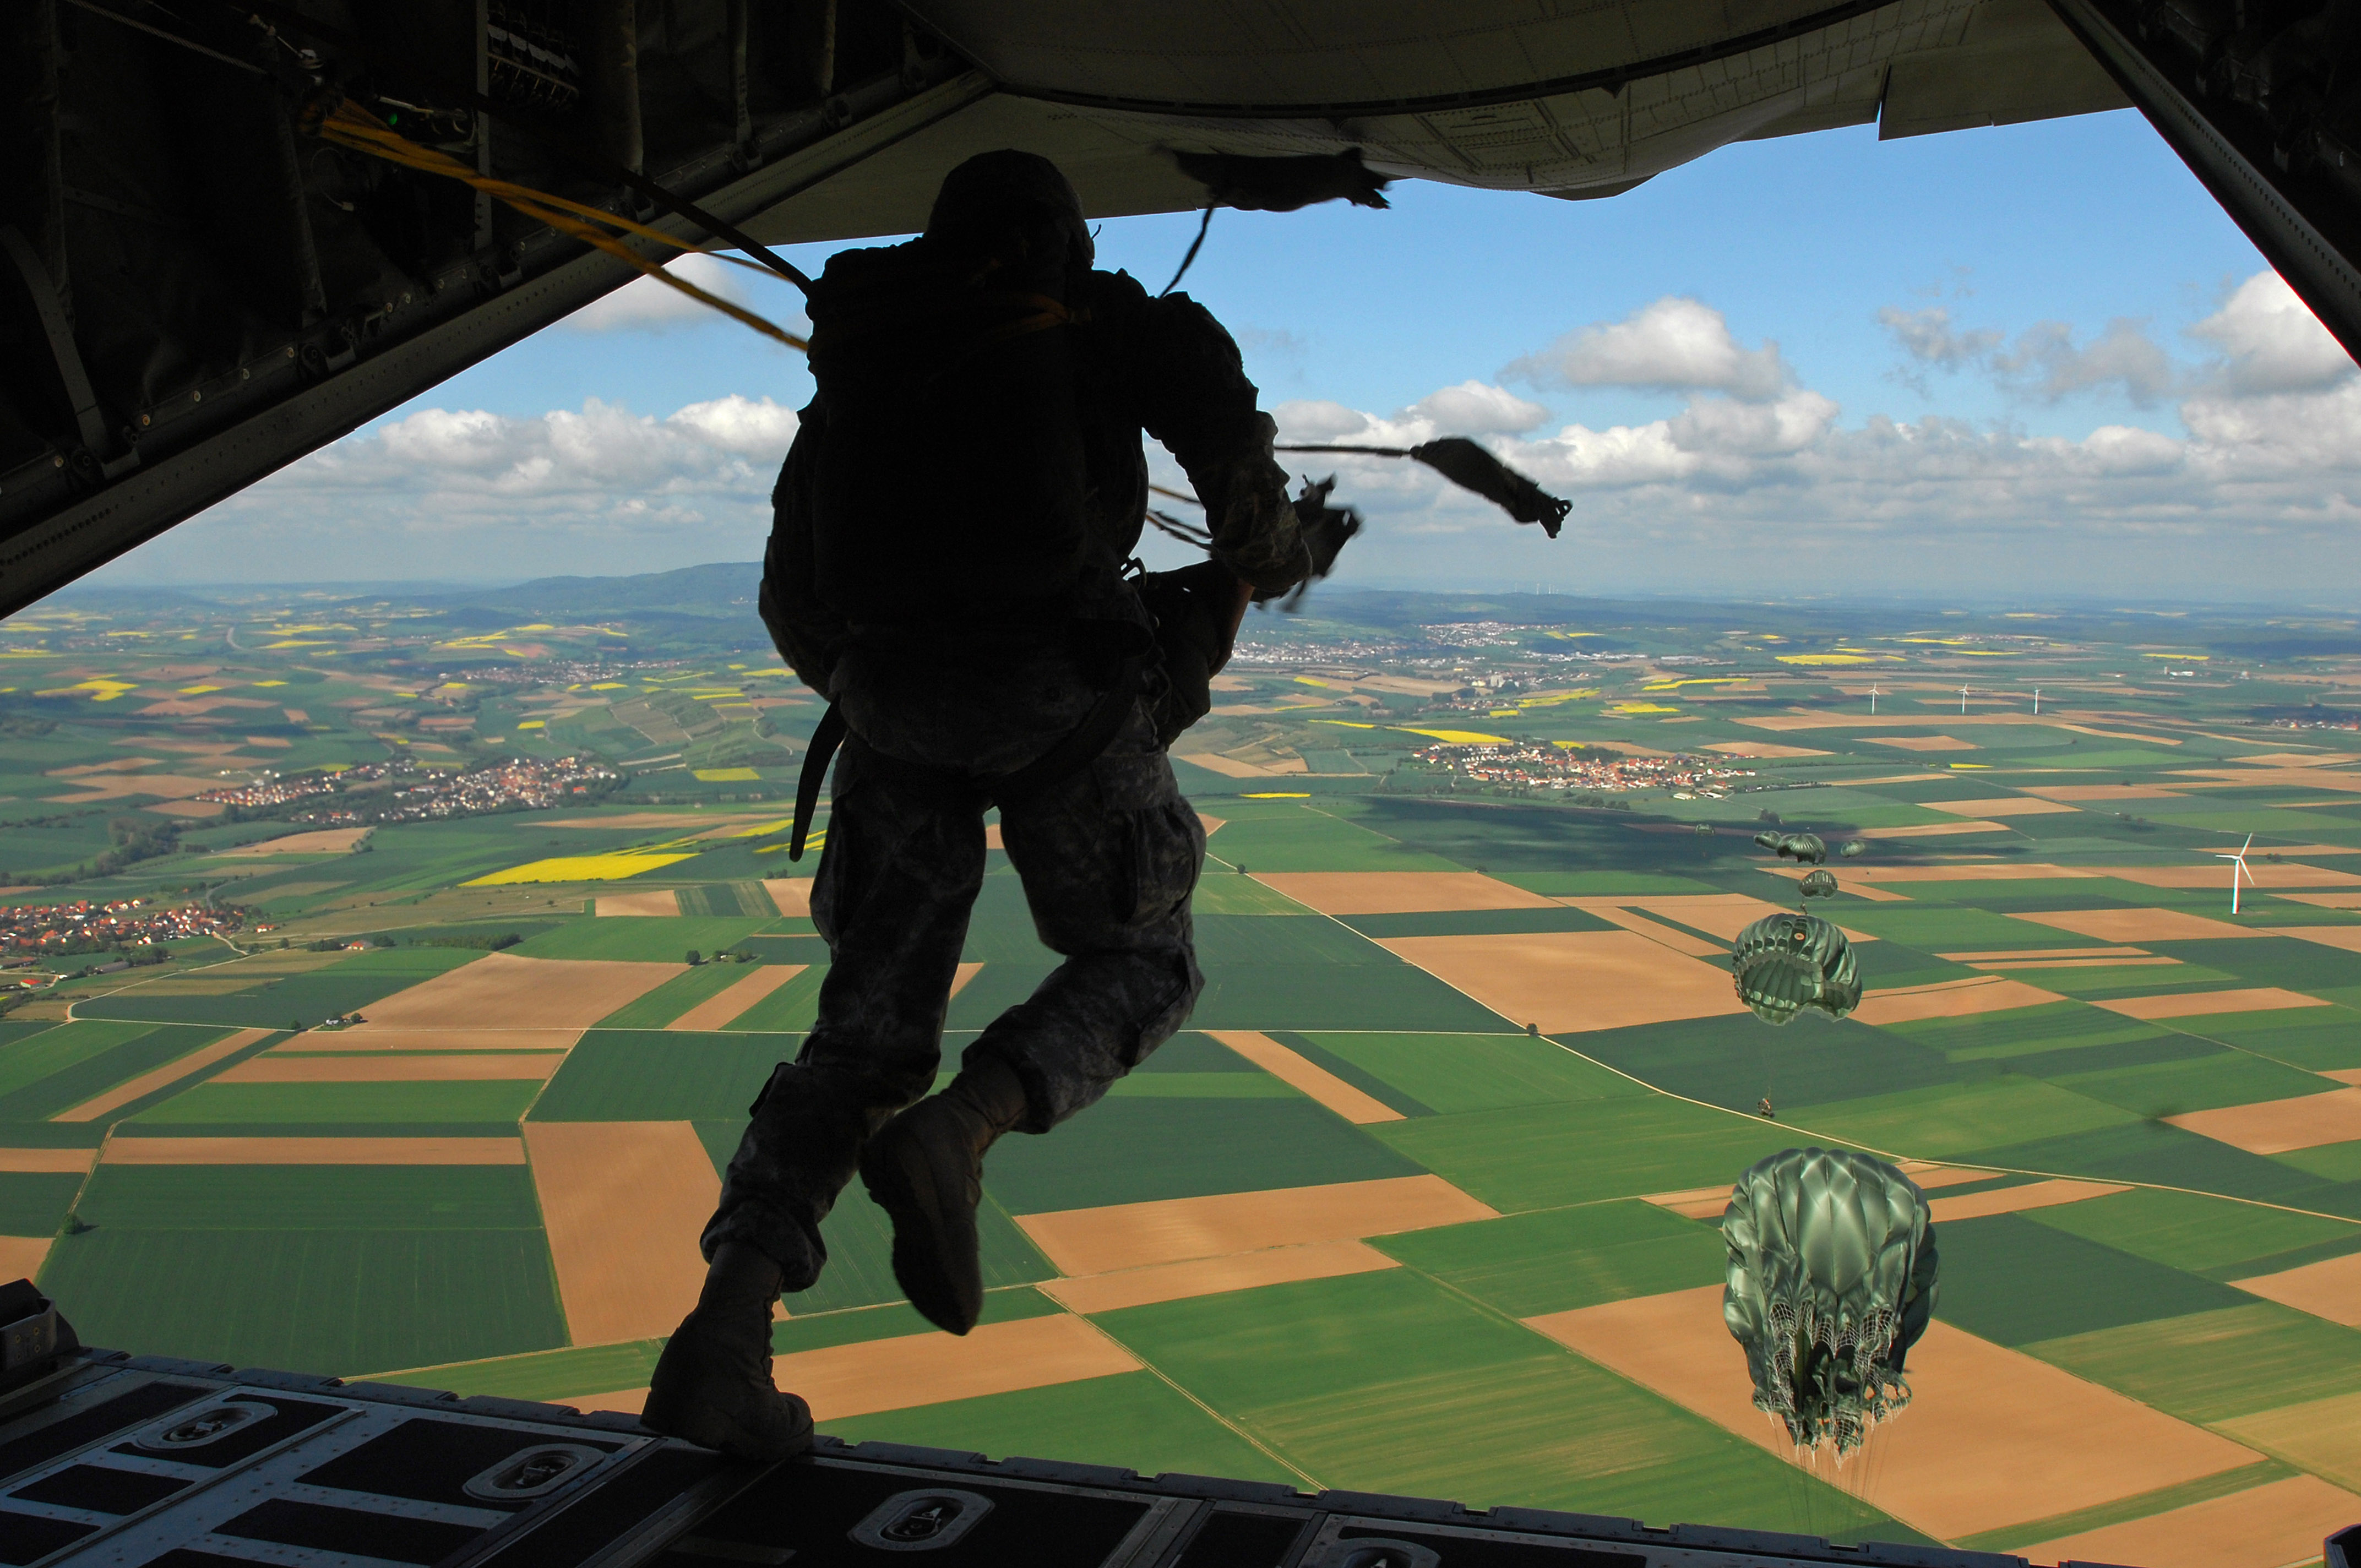 Paratrooper Backgrounds on Wallpapers Vista